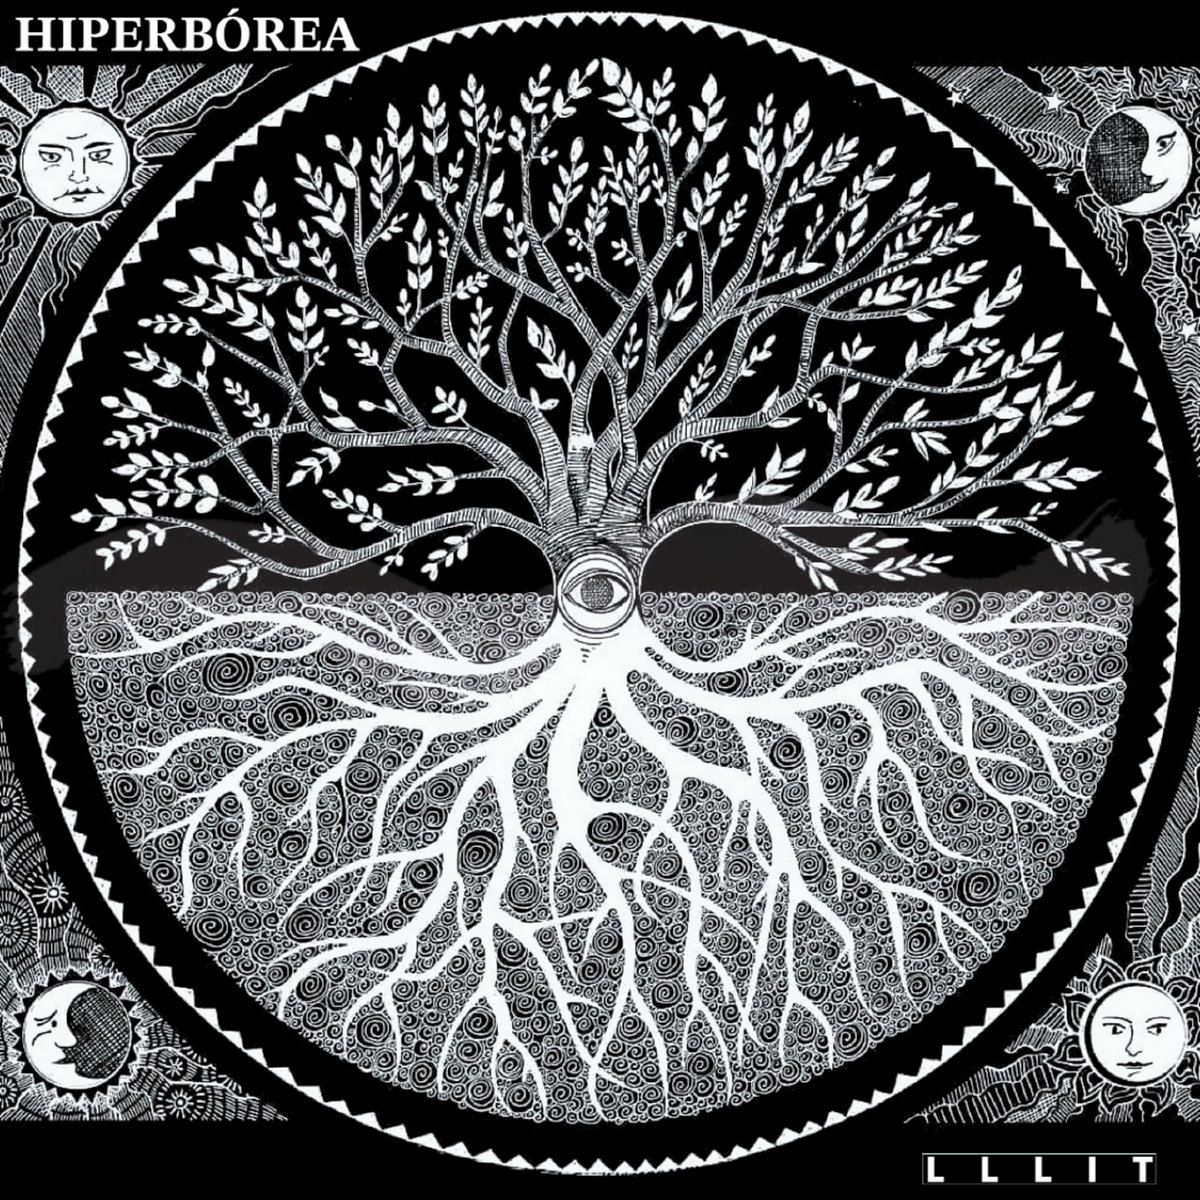 lllit – Hiperbórea